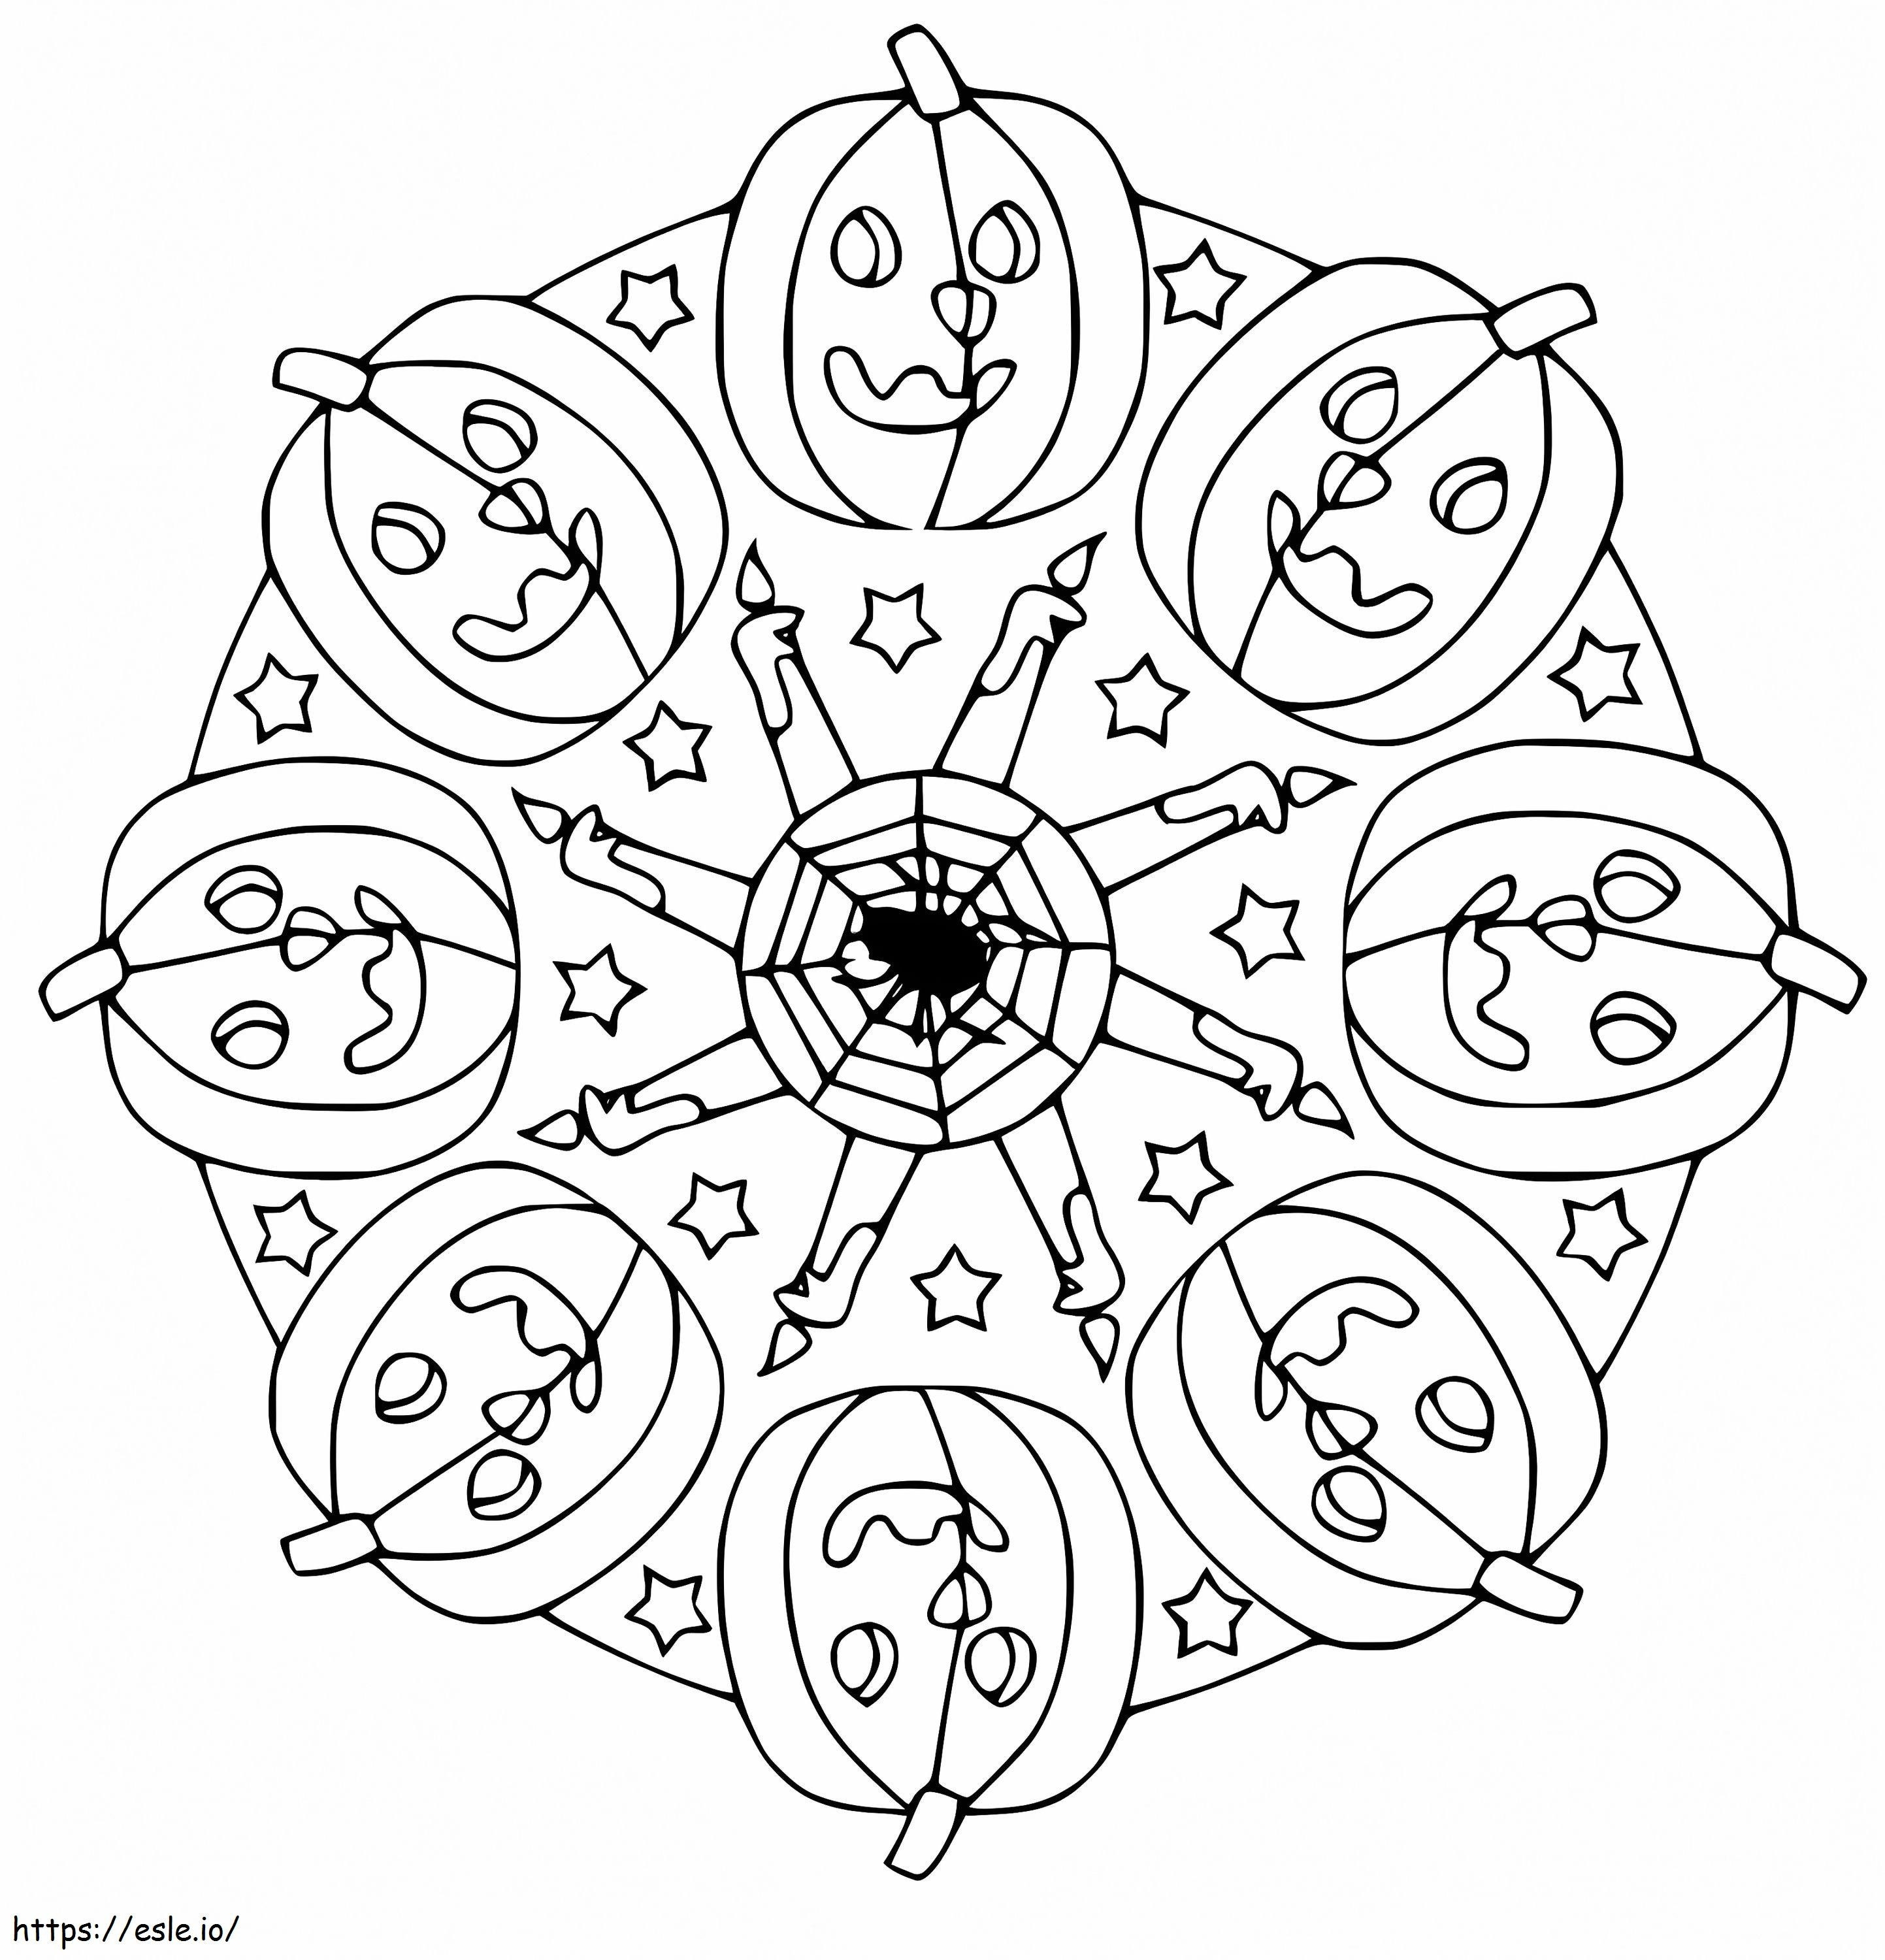 Halloween Mandala 6 coloring page